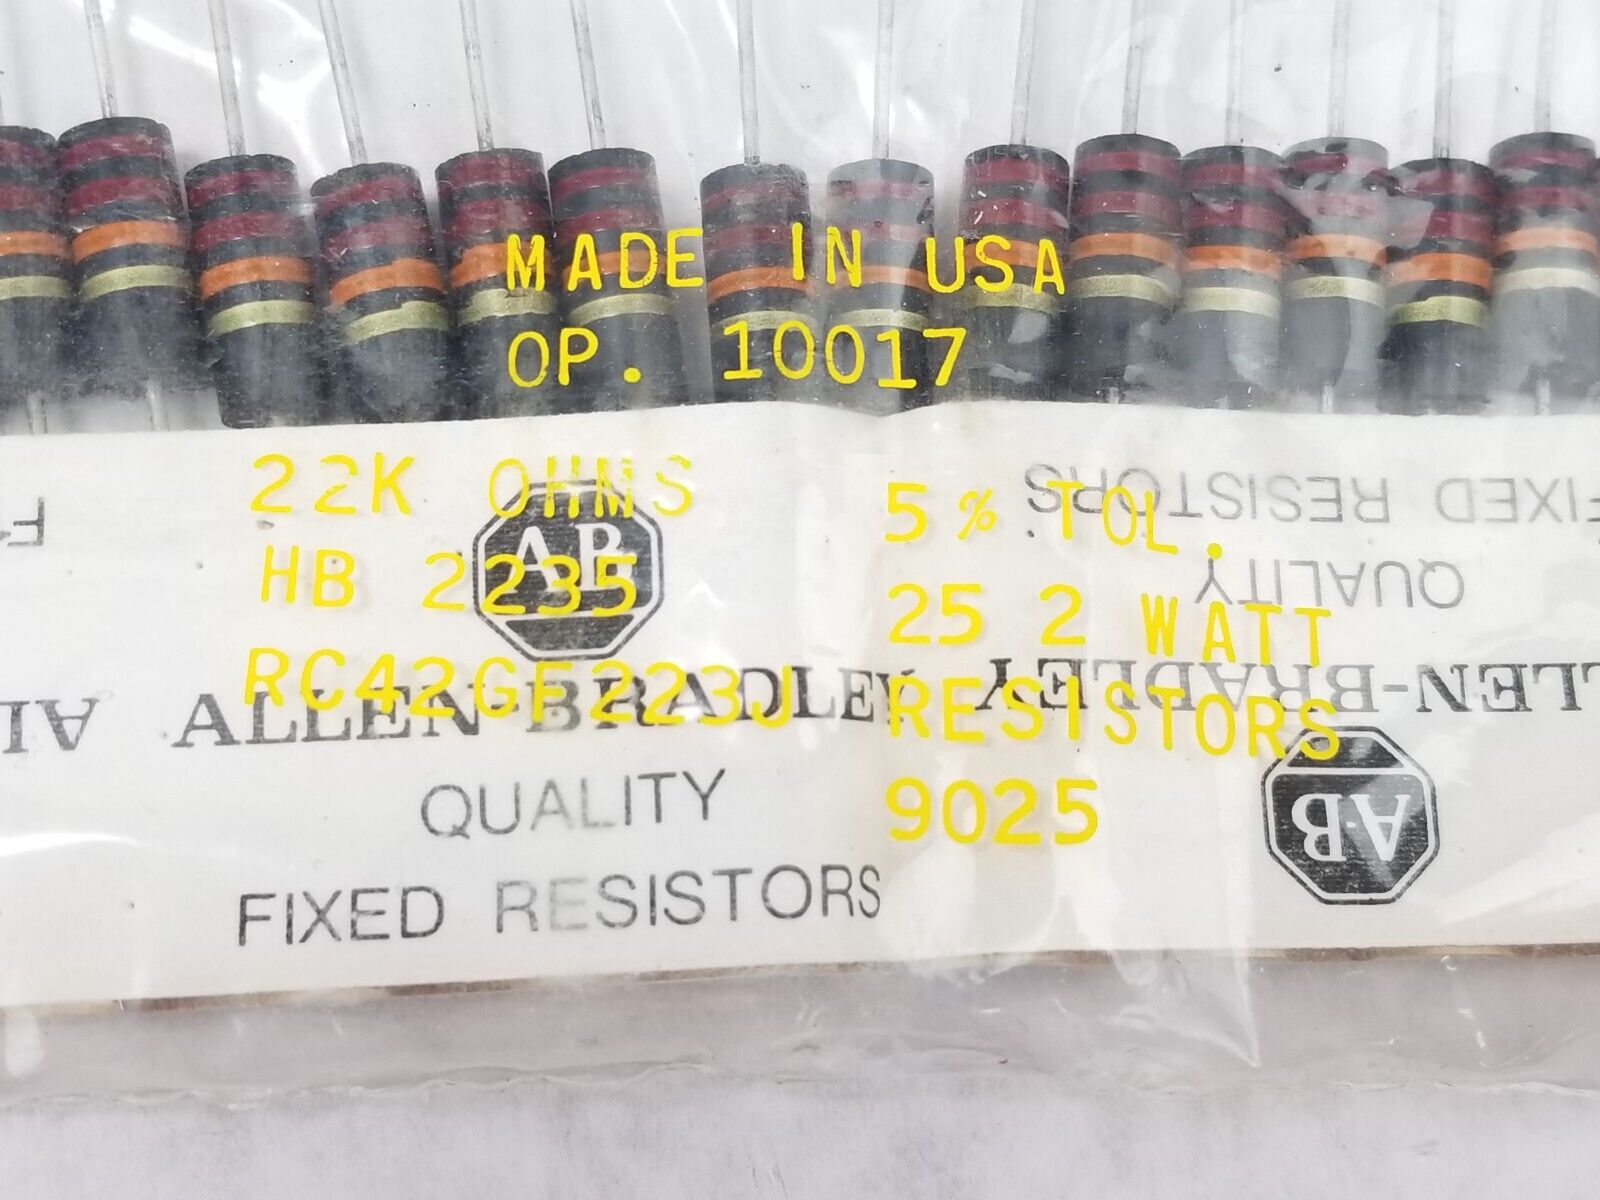 Lot of(25) Allen-Bradley 22K OHMS 2W RC42GF223J Resistors HB 2235